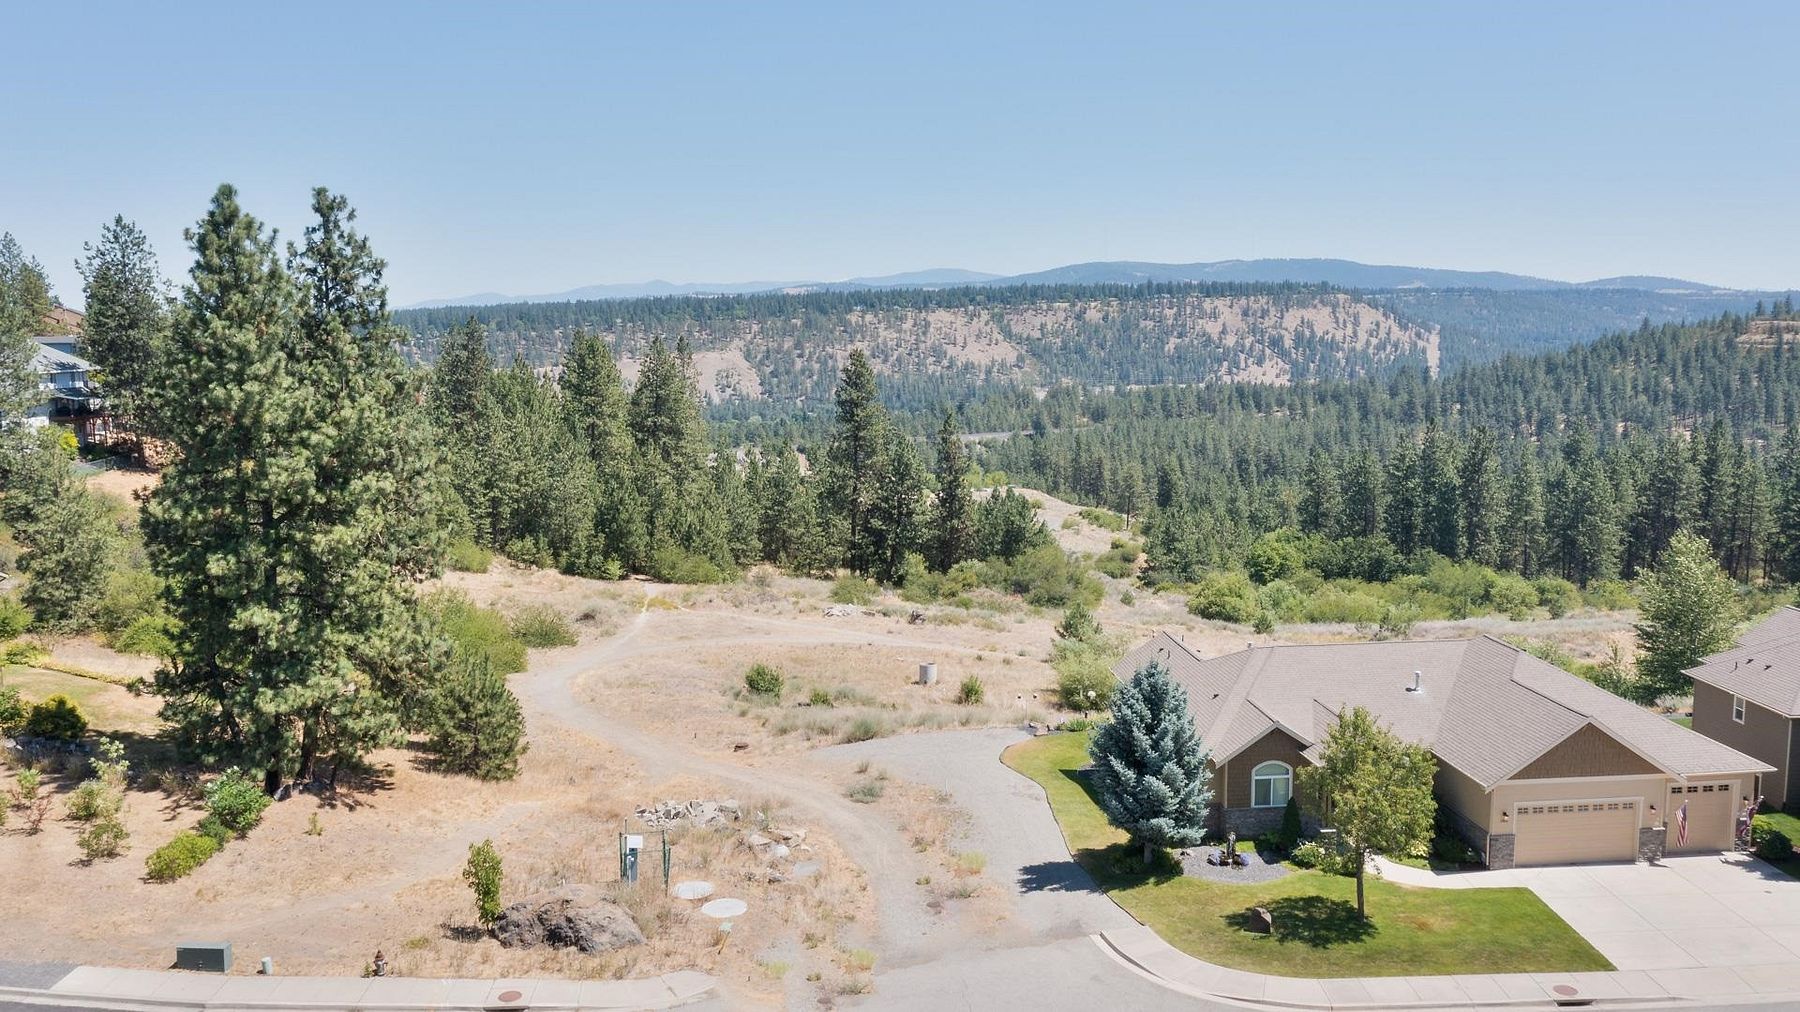 11.7 Acres of Land for Sale in Spokane, Washington